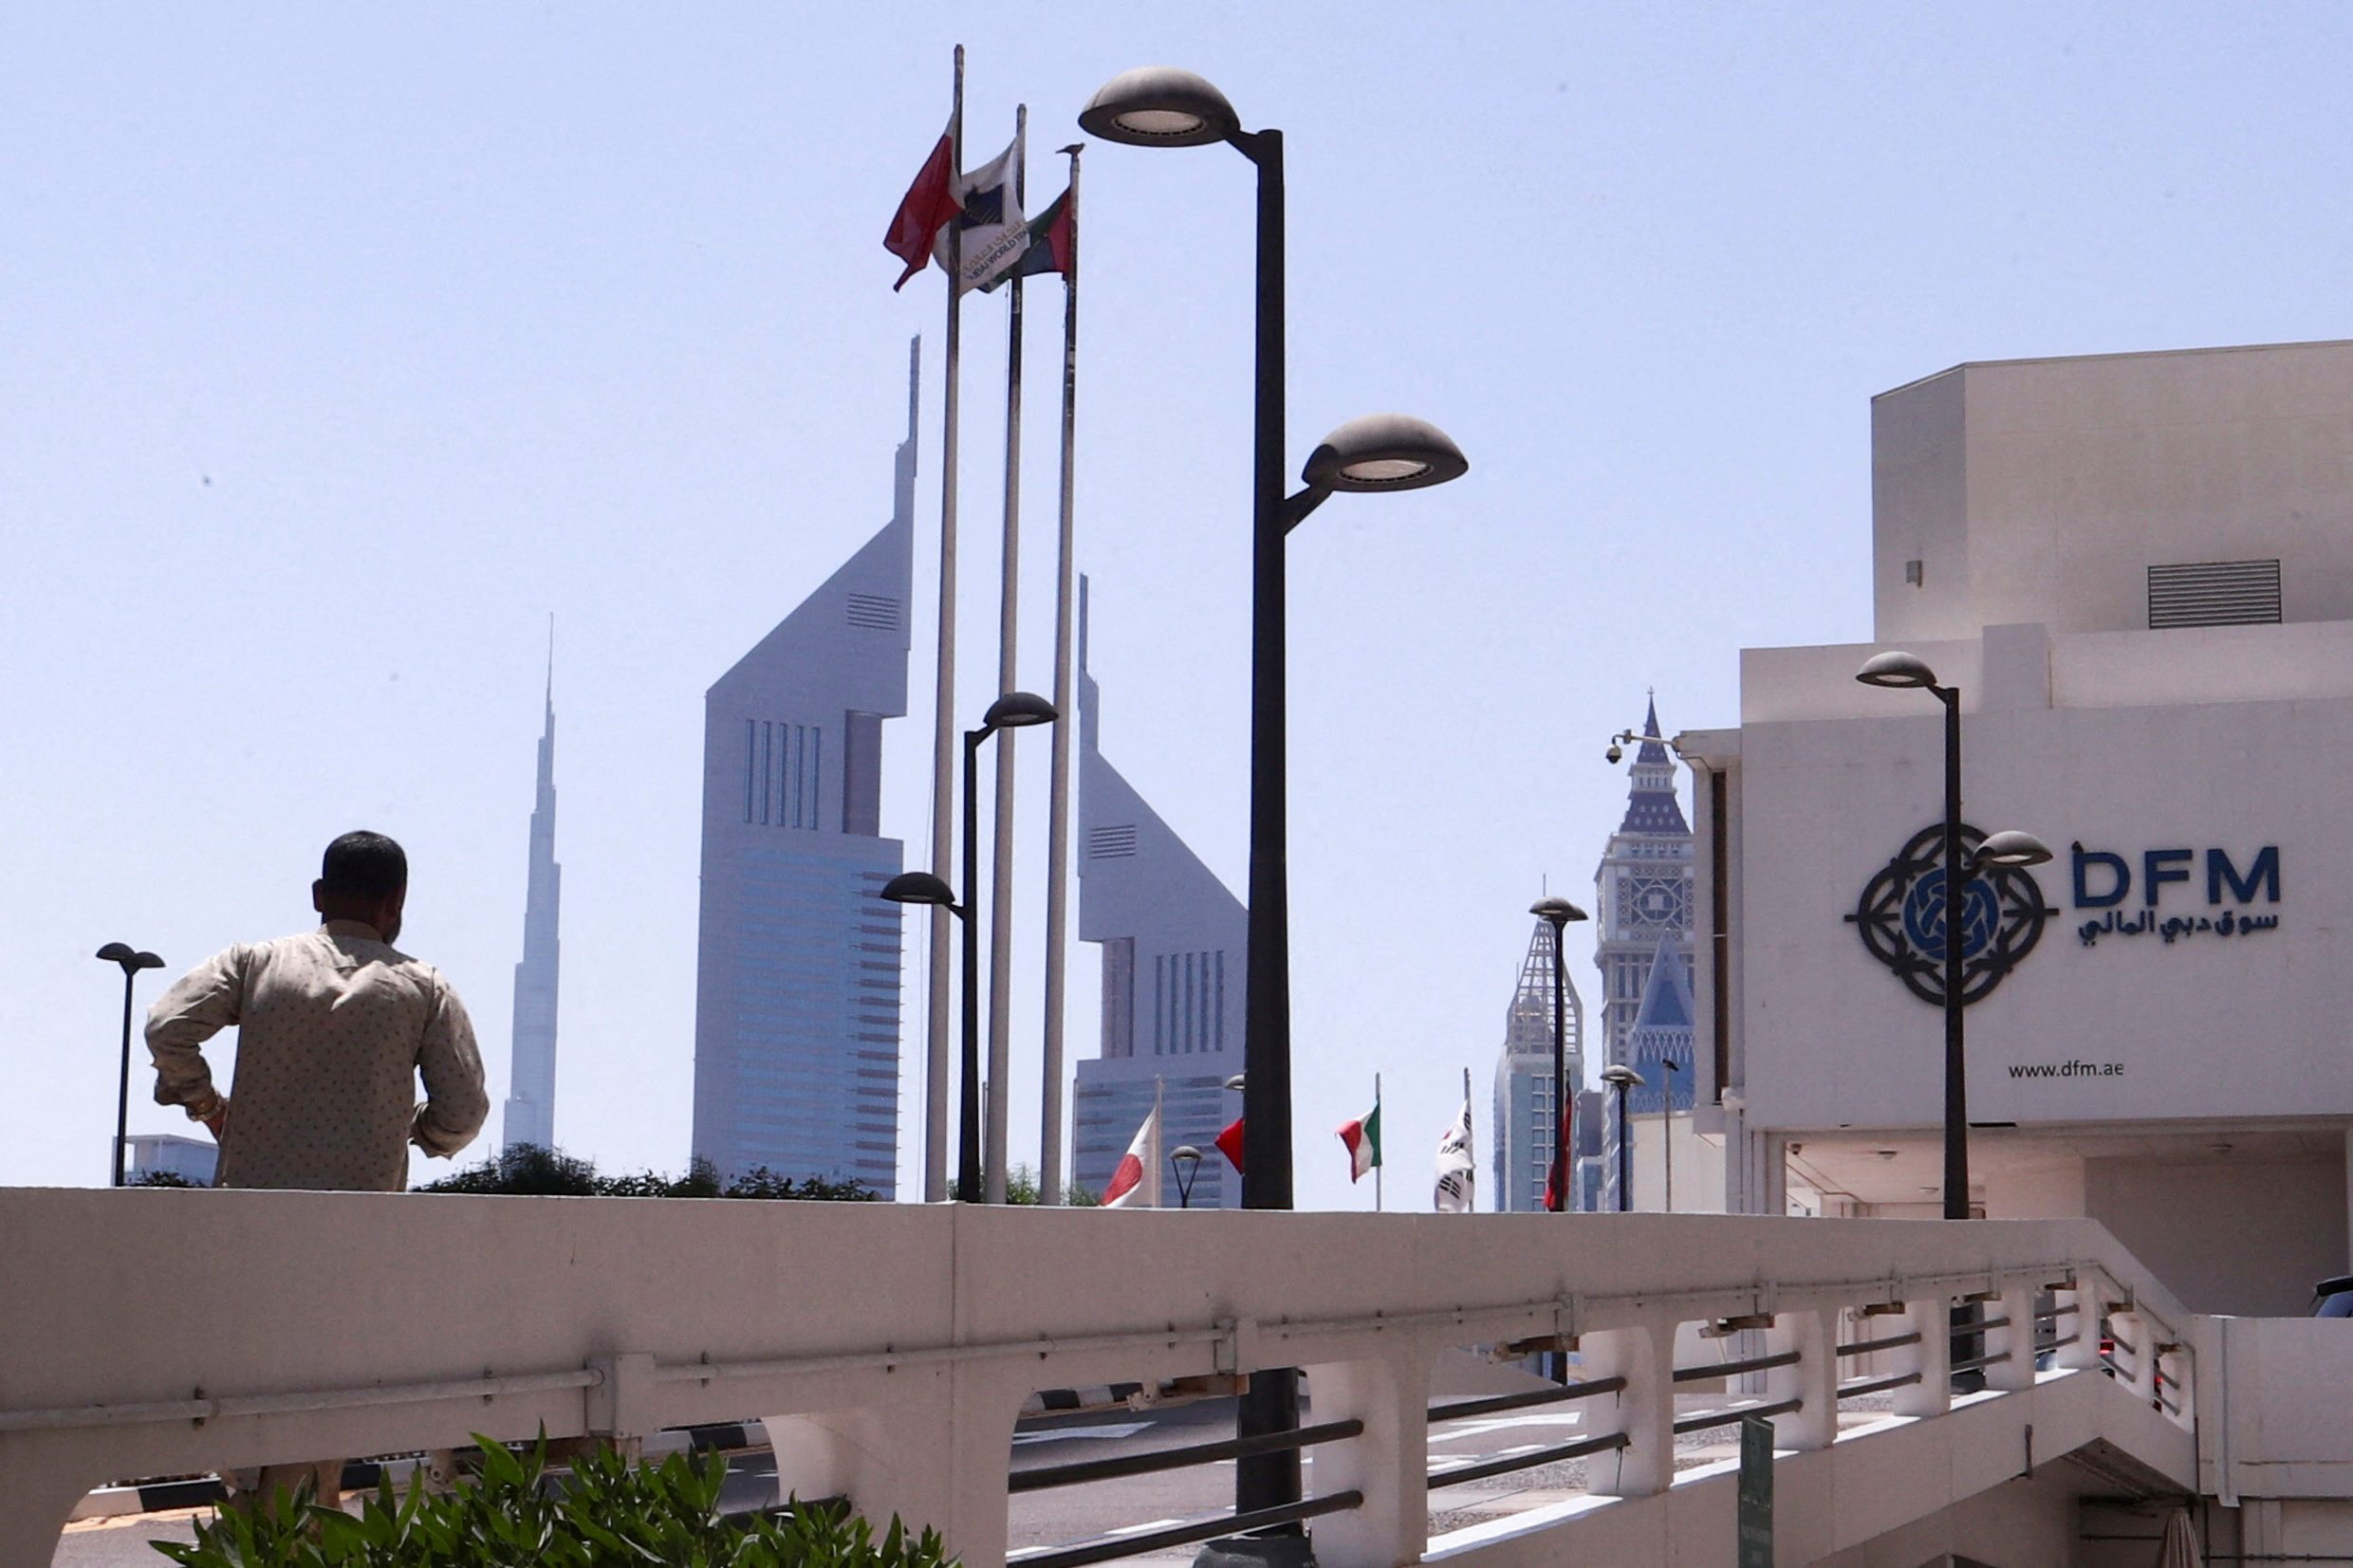 Dubai financial market